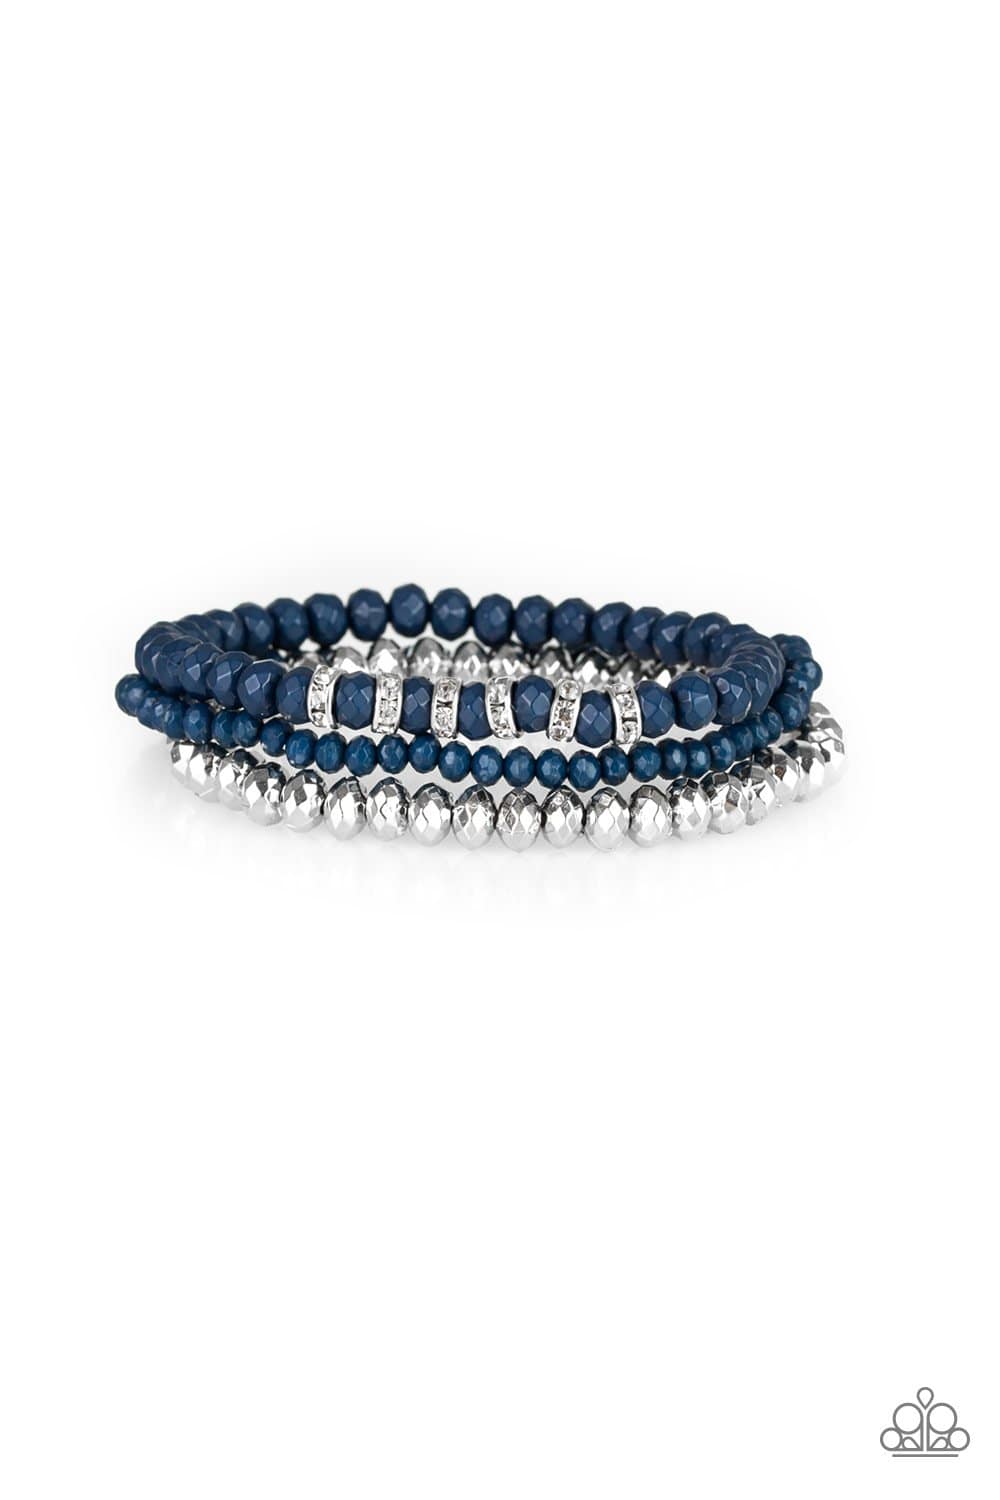 Ideal Idol - Blue Stretchy Bracelet - Paparazzi Accessories - GlaMarous Titi Jewels